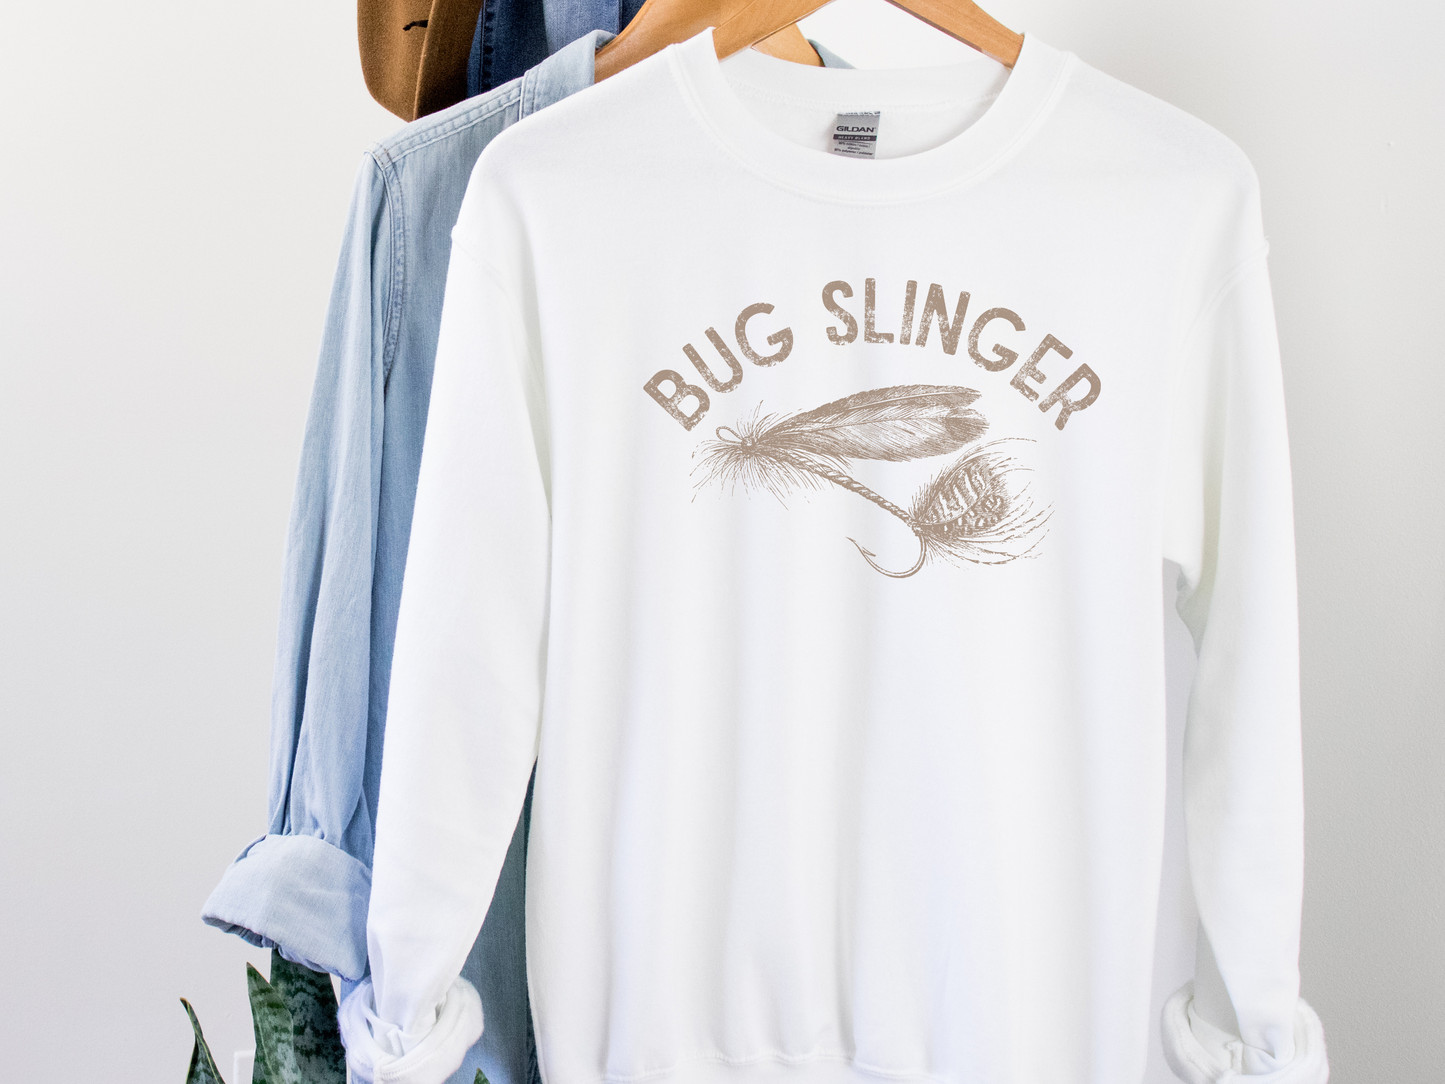 Bug Slinger Fly Fishing Unisex Crewneck Sweatshirt